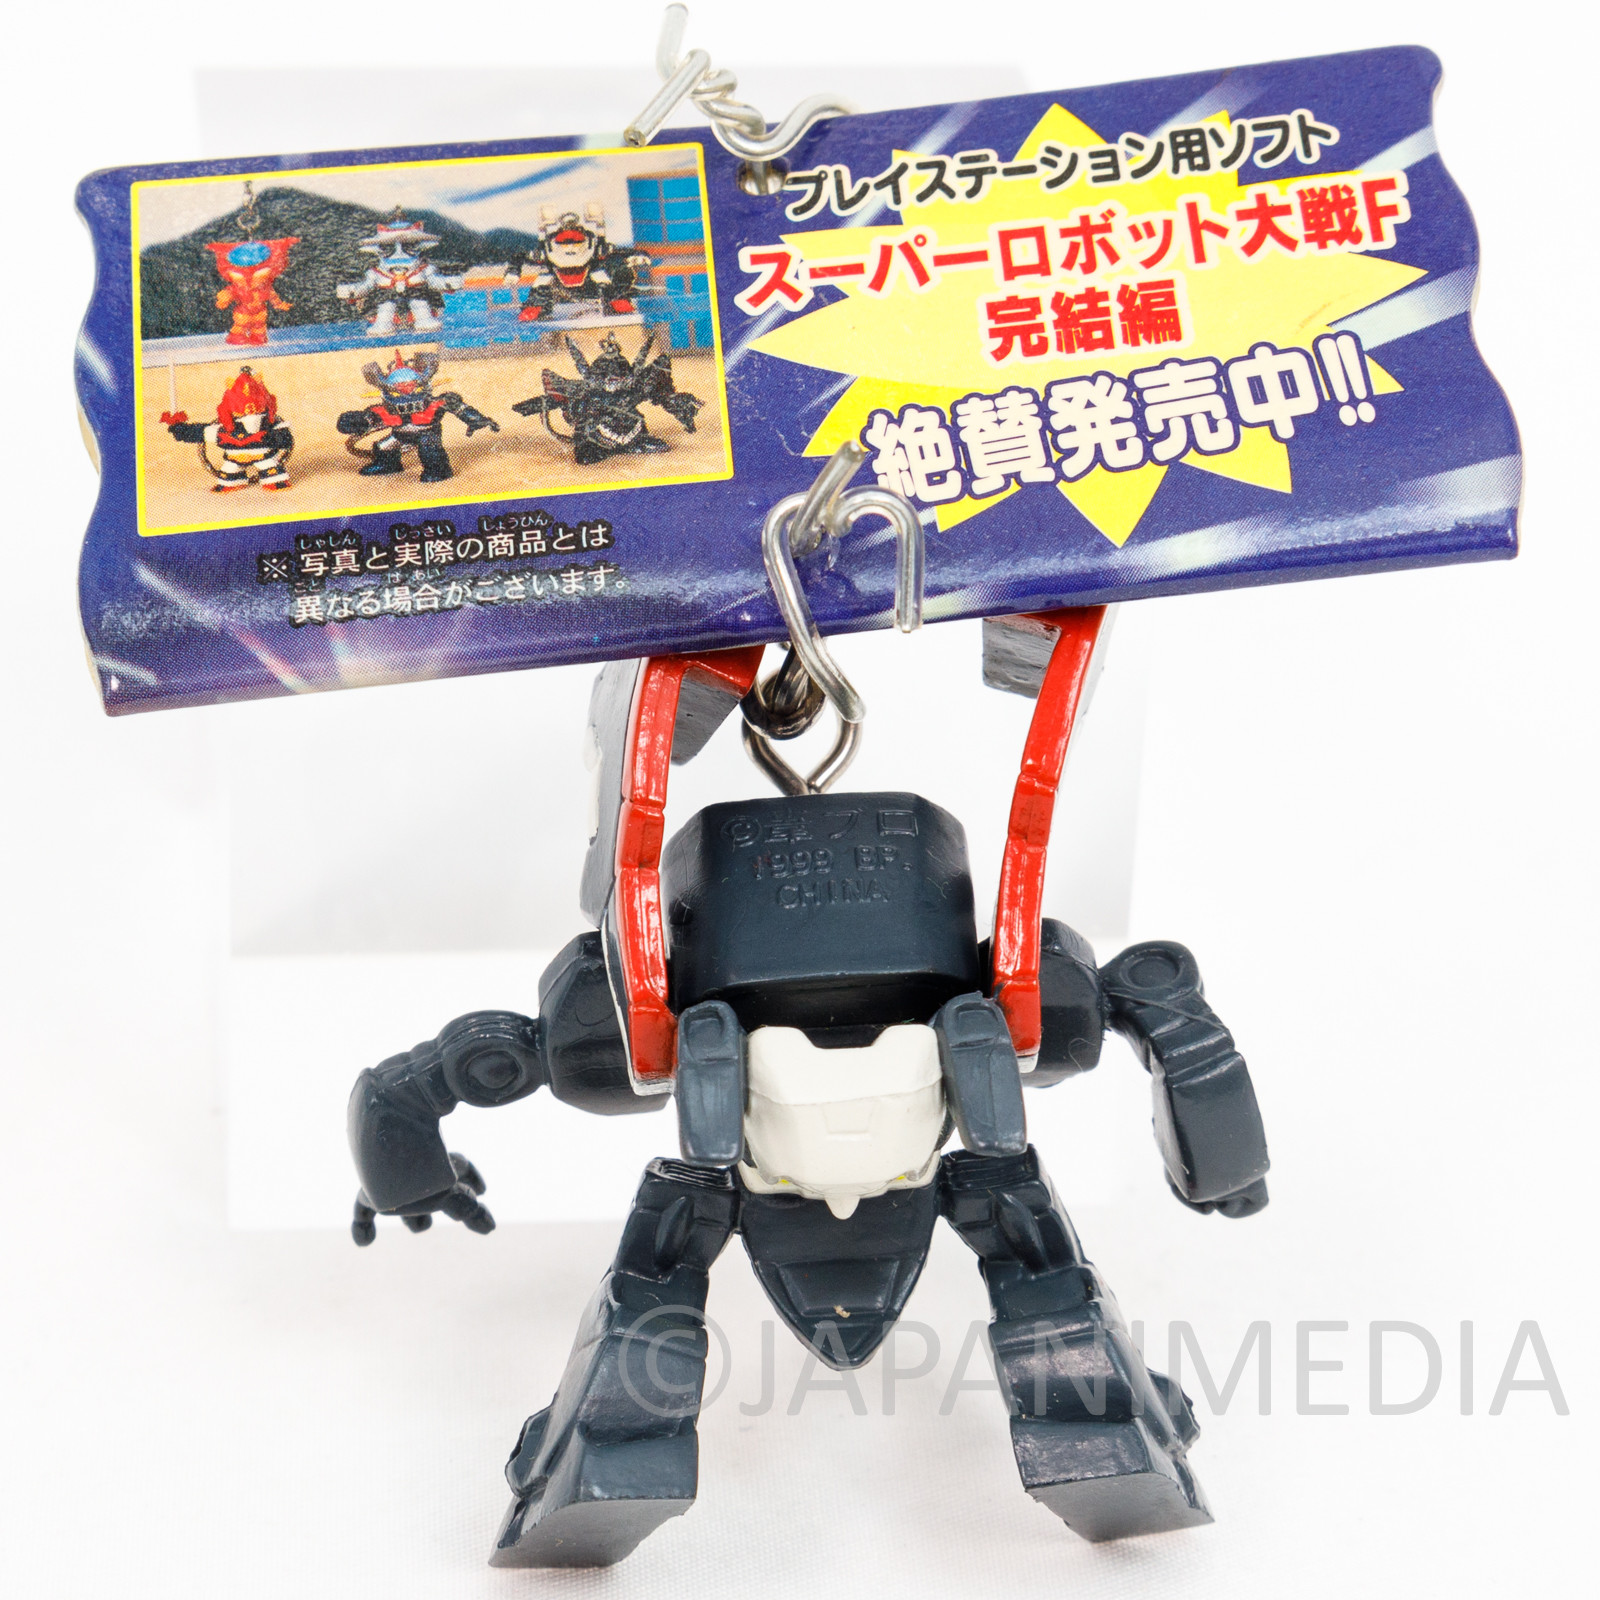 Super Beast Machine God Dancoug Eagle Fighter H Robot Wars Figure Key Chain